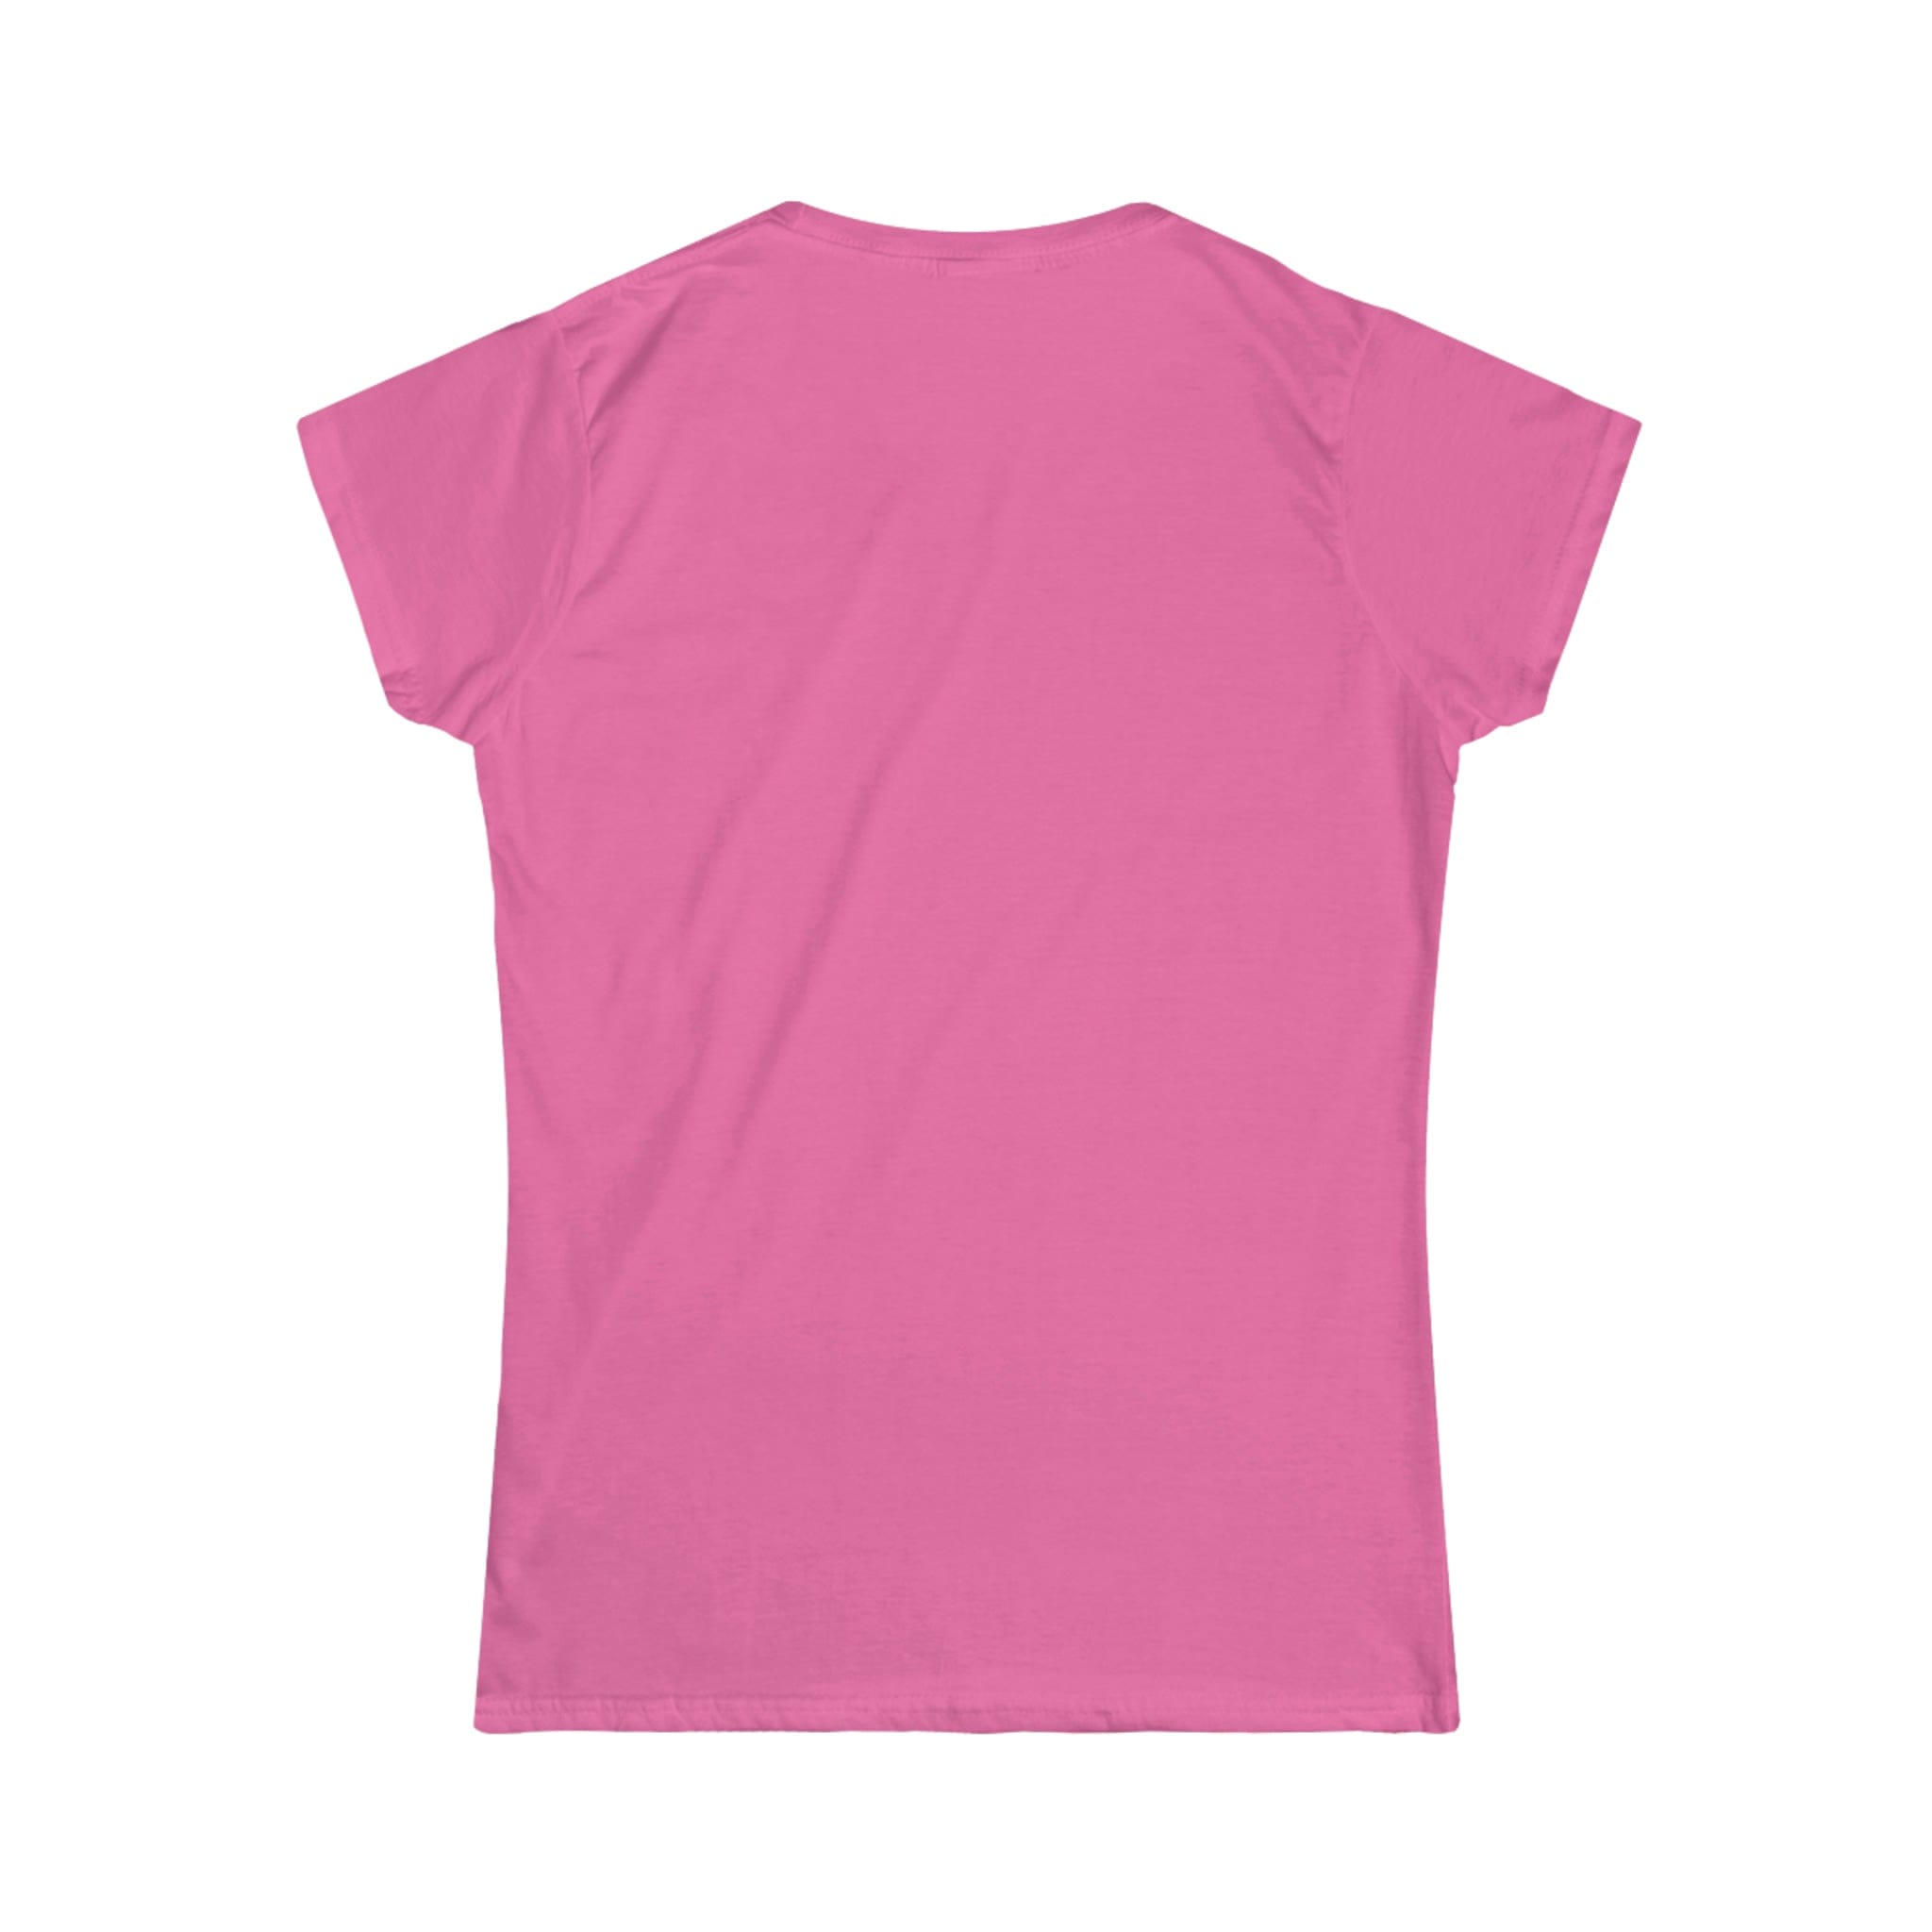 Printify T-Shirt Pink Pig Women's Softstyle Tee - S-2XL